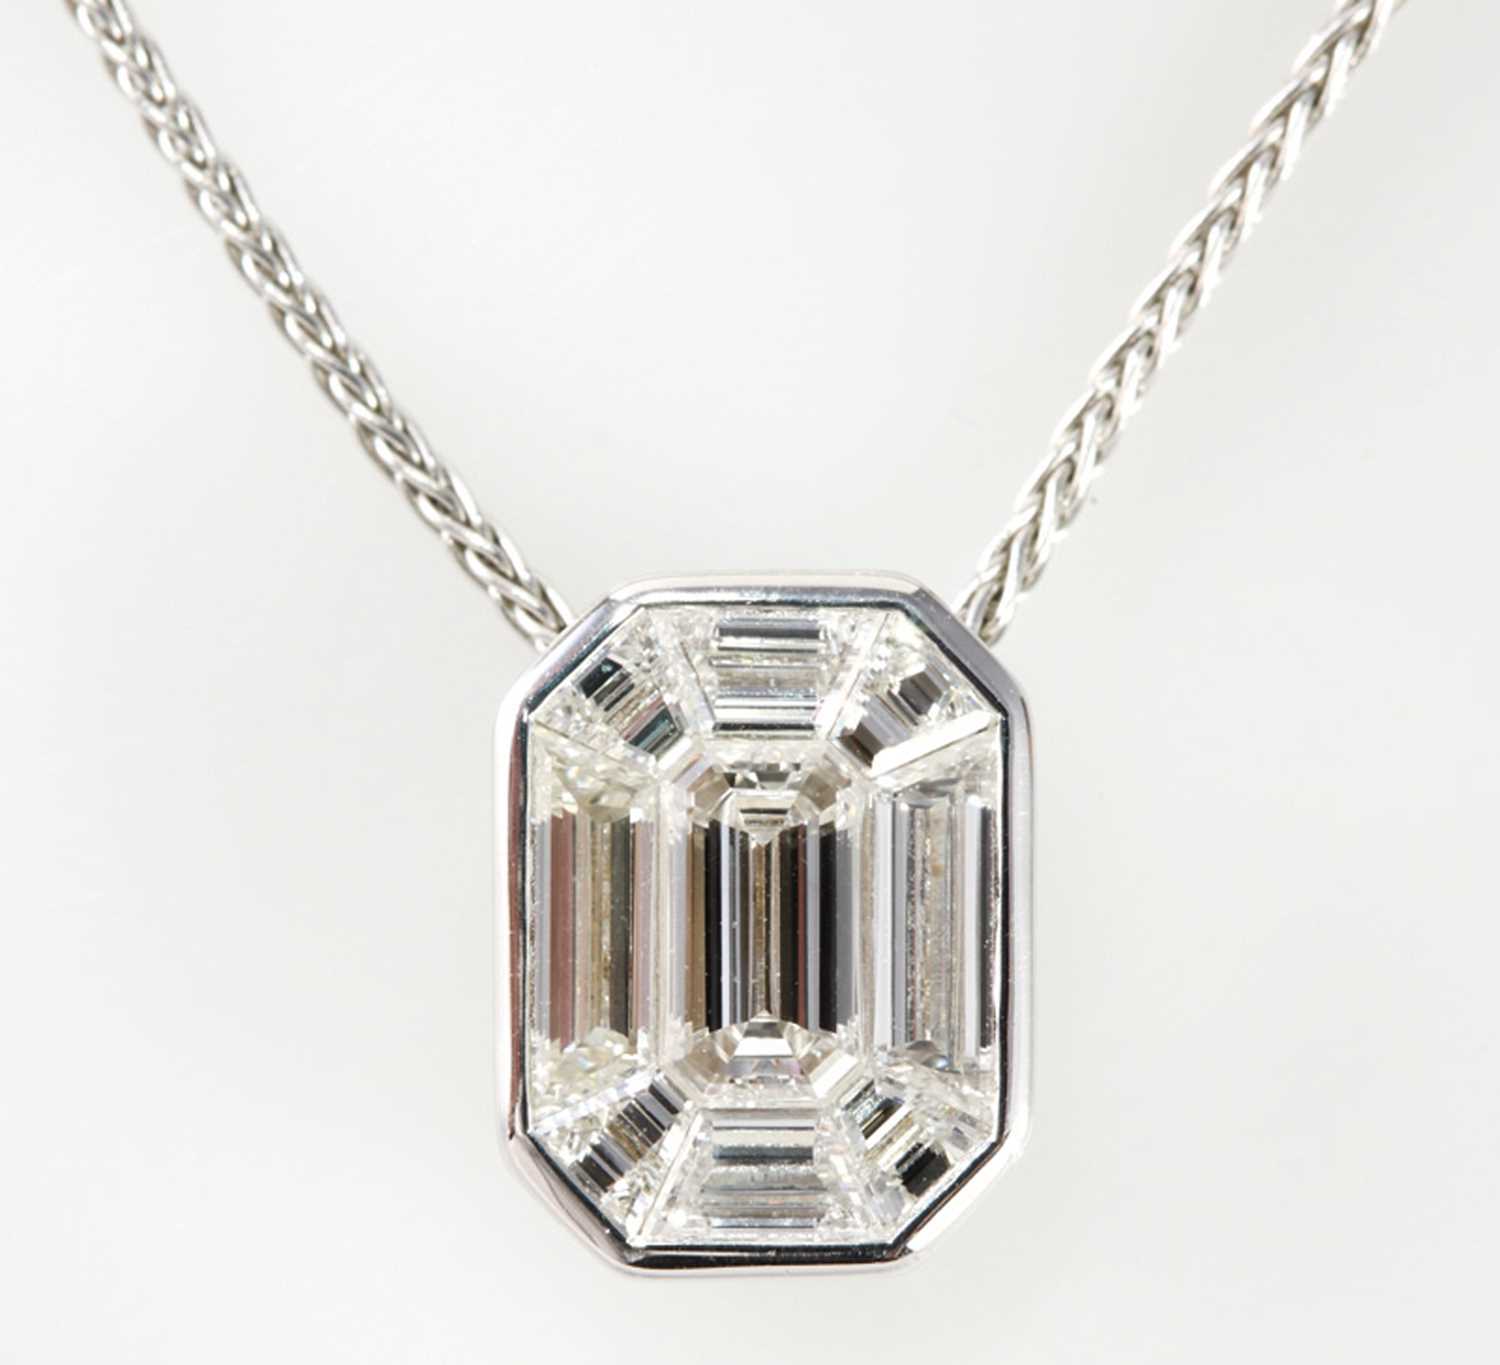 Lot 1 - 18ct white gold ‘Emerella’ octagonal shape diamond pendant